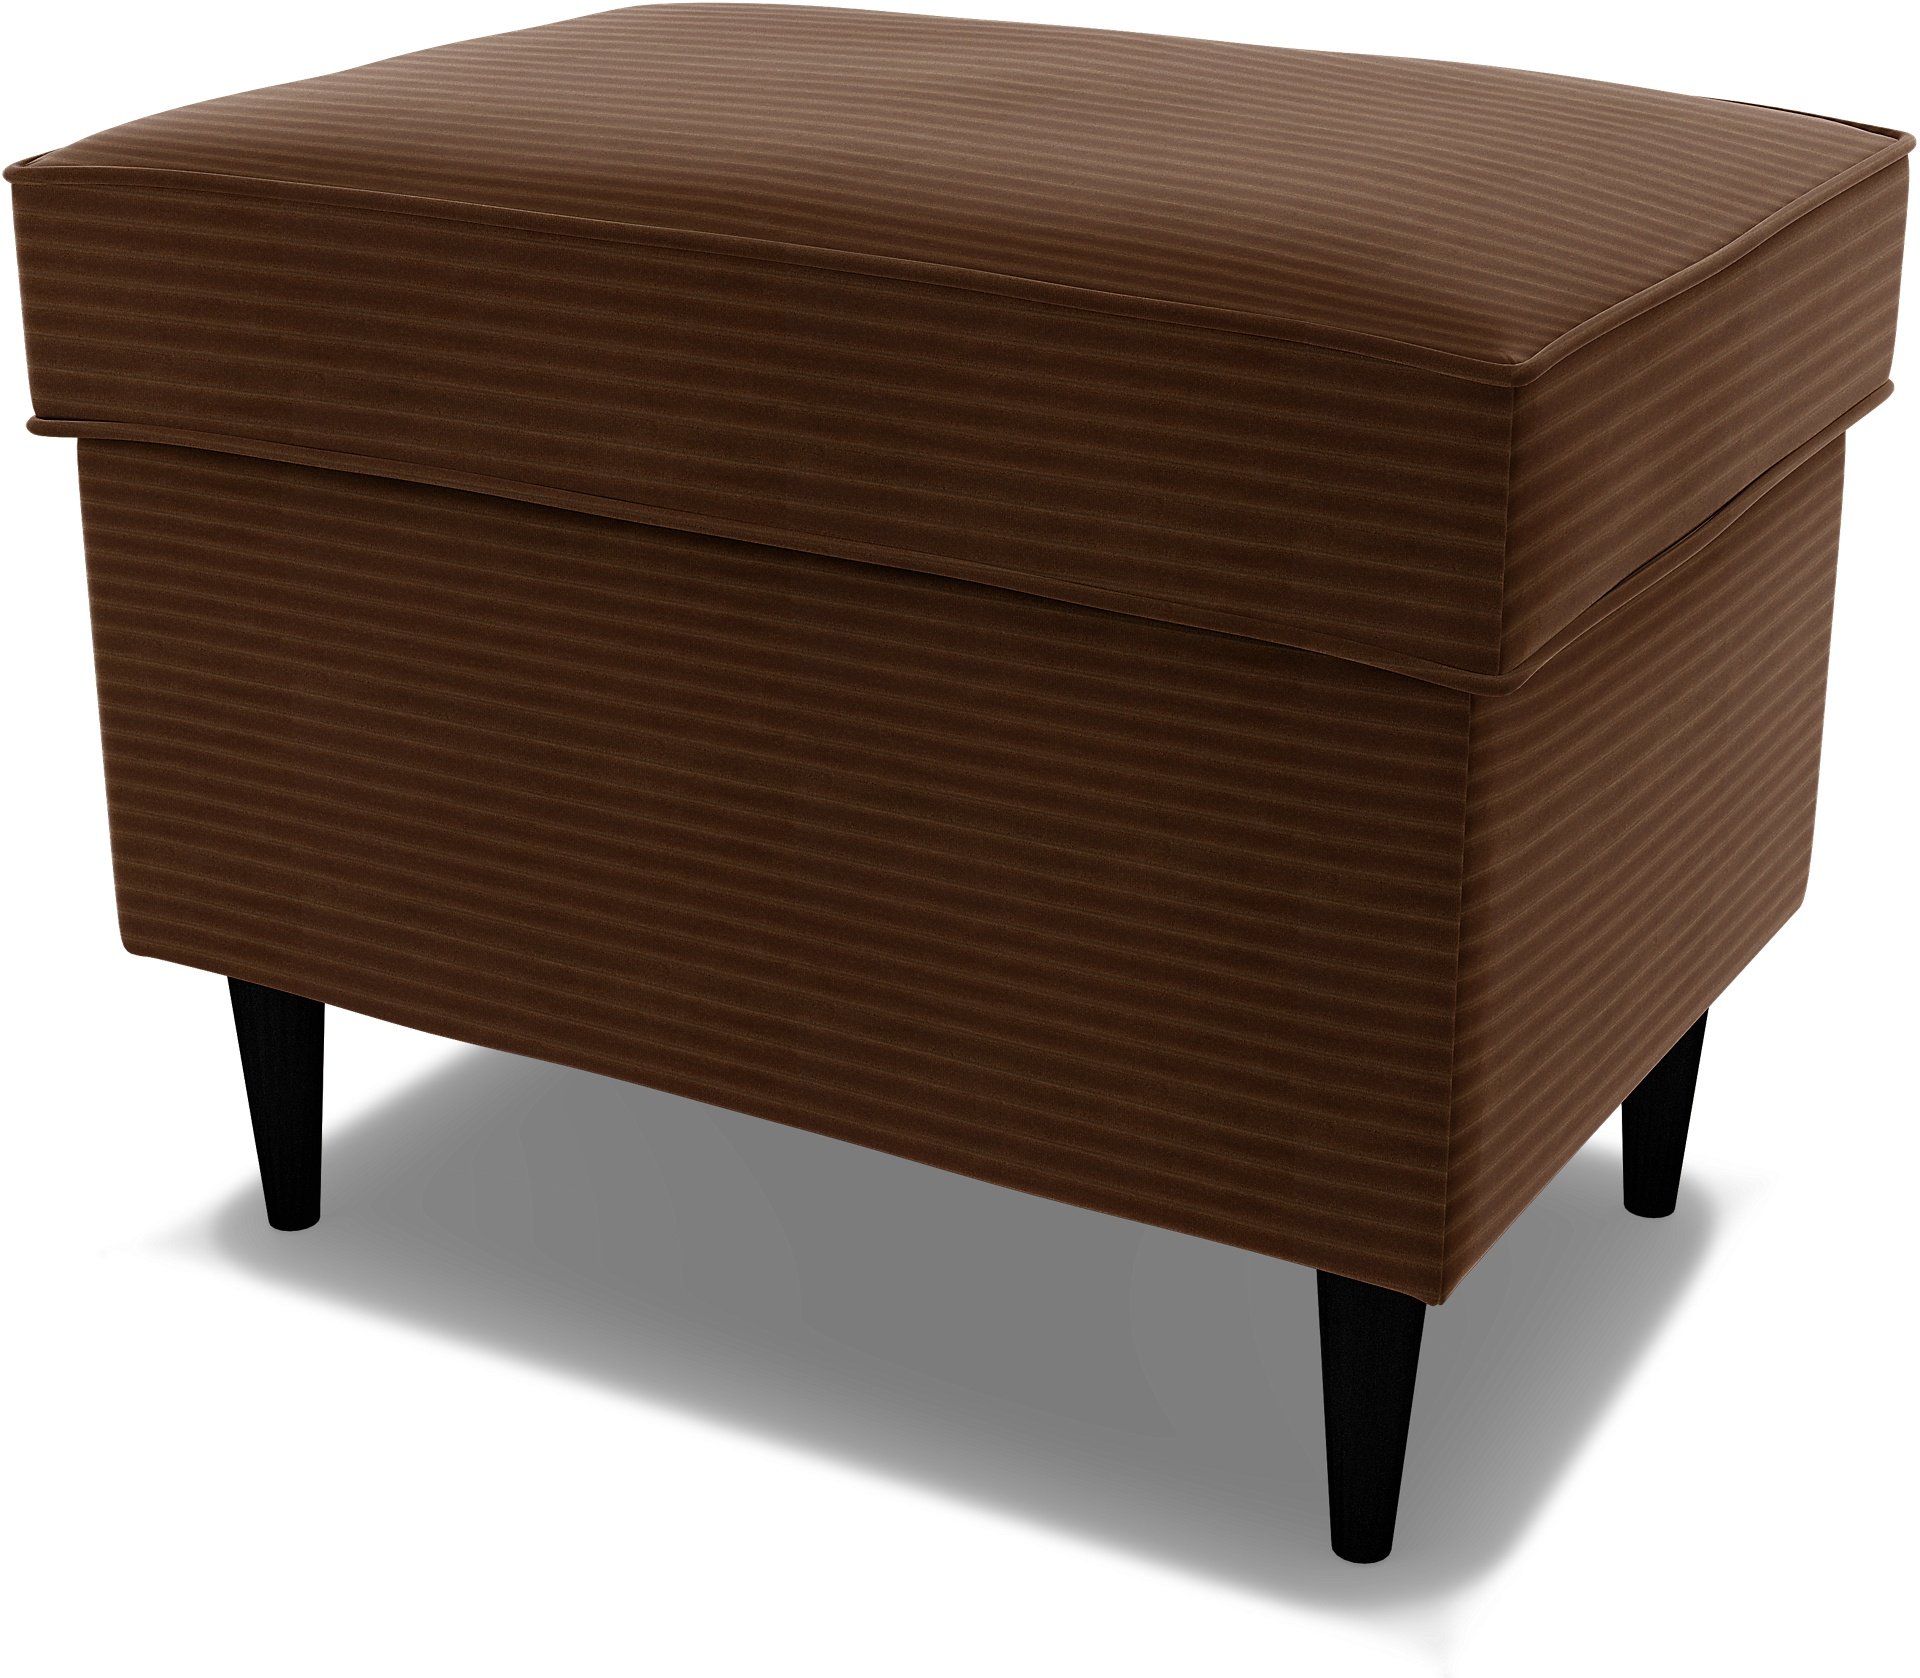 IKEA - Strandmon Footstool cover, Chocolate Brown, Corduroy - Bemz